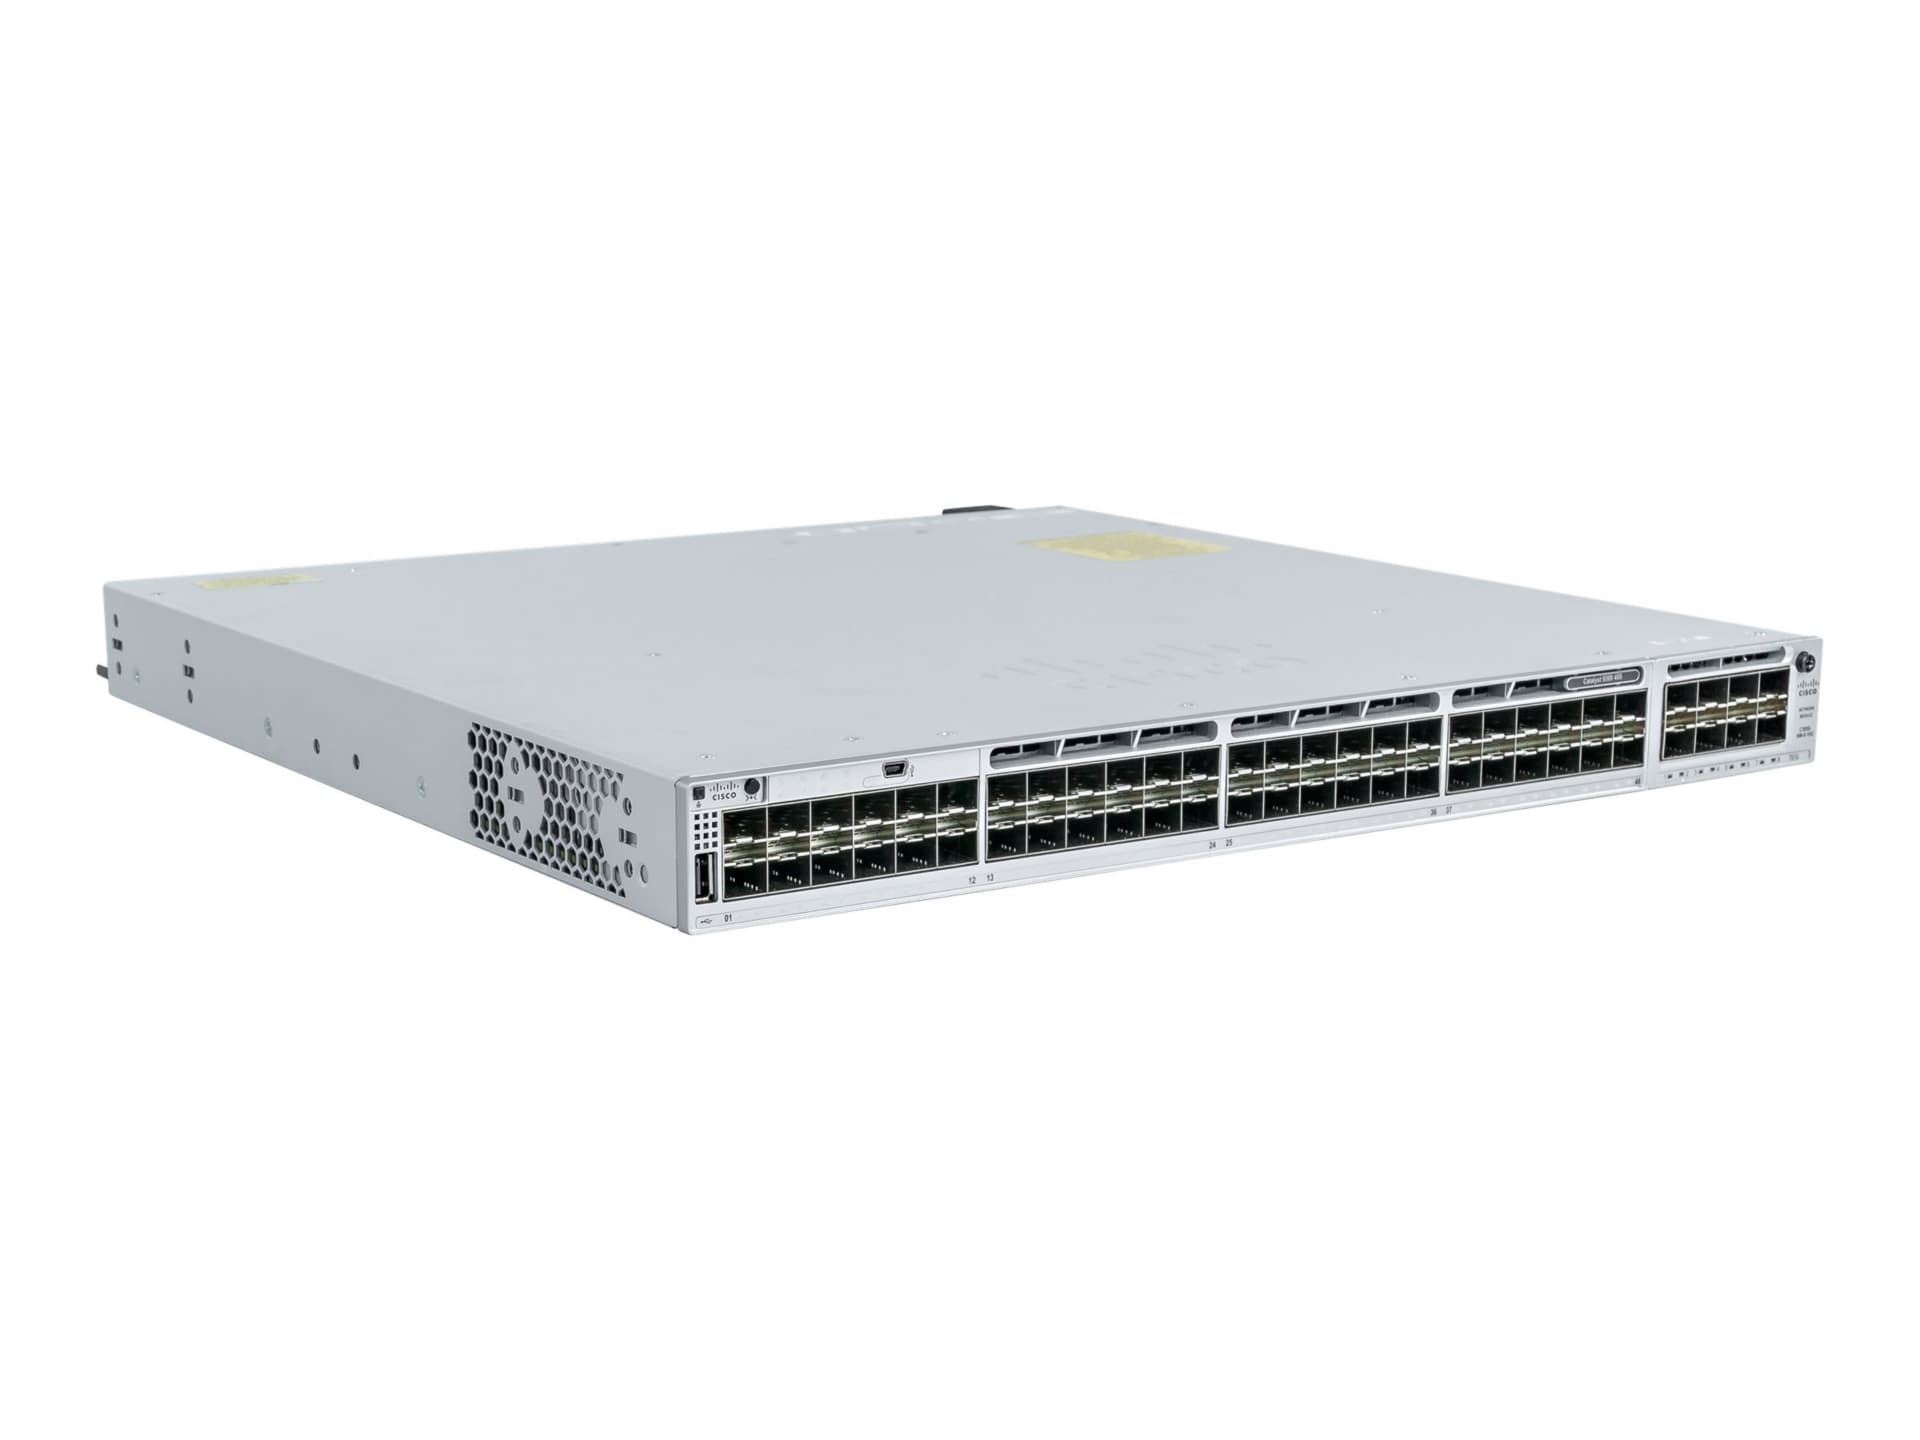 Cisco Meraki Catalyst 9300-48T - switch - 48 ports - managed - rack-mountab